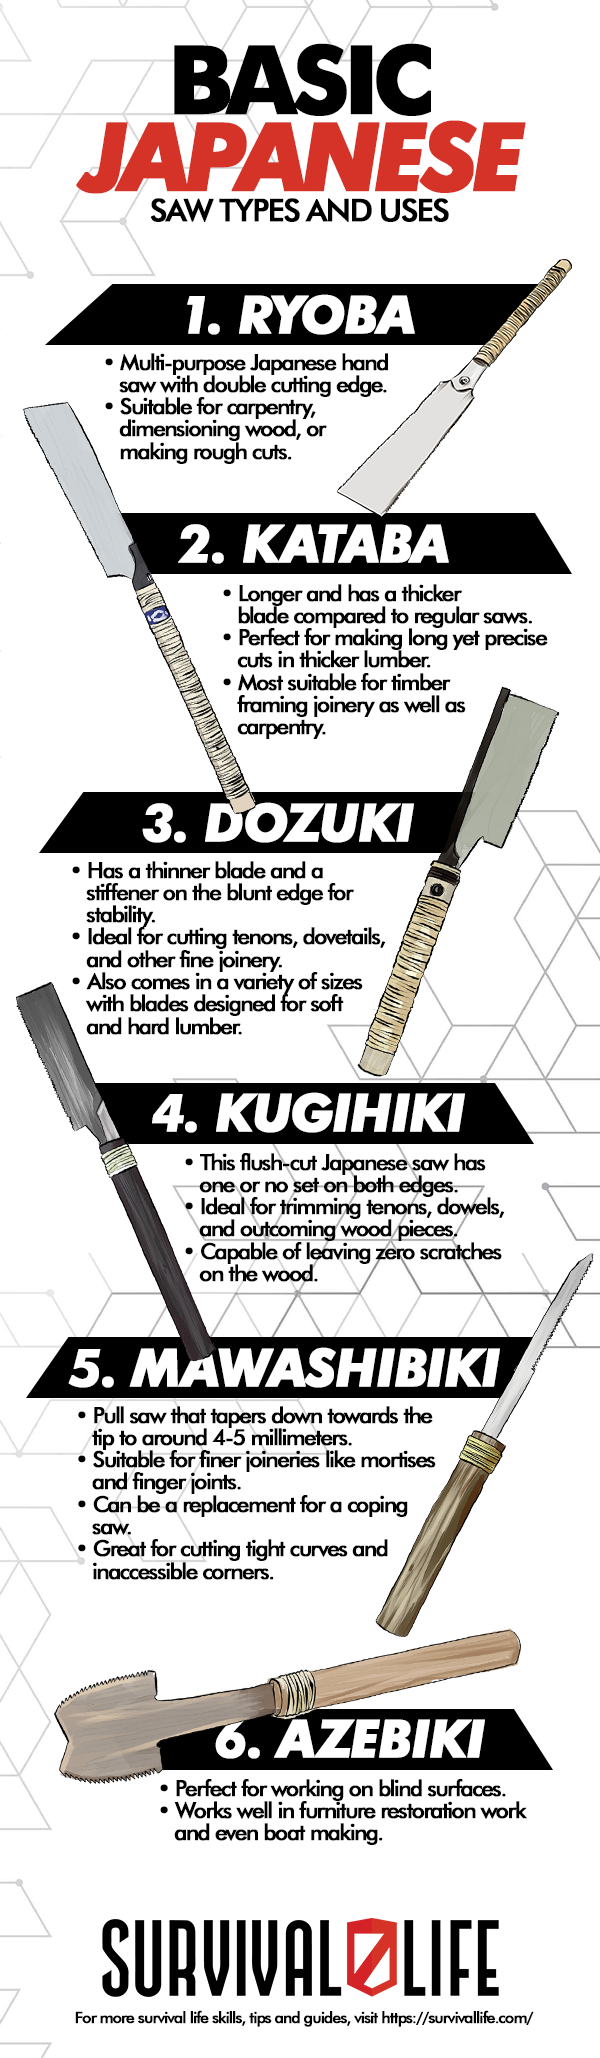 Basic Japanese Saw Types and Uses